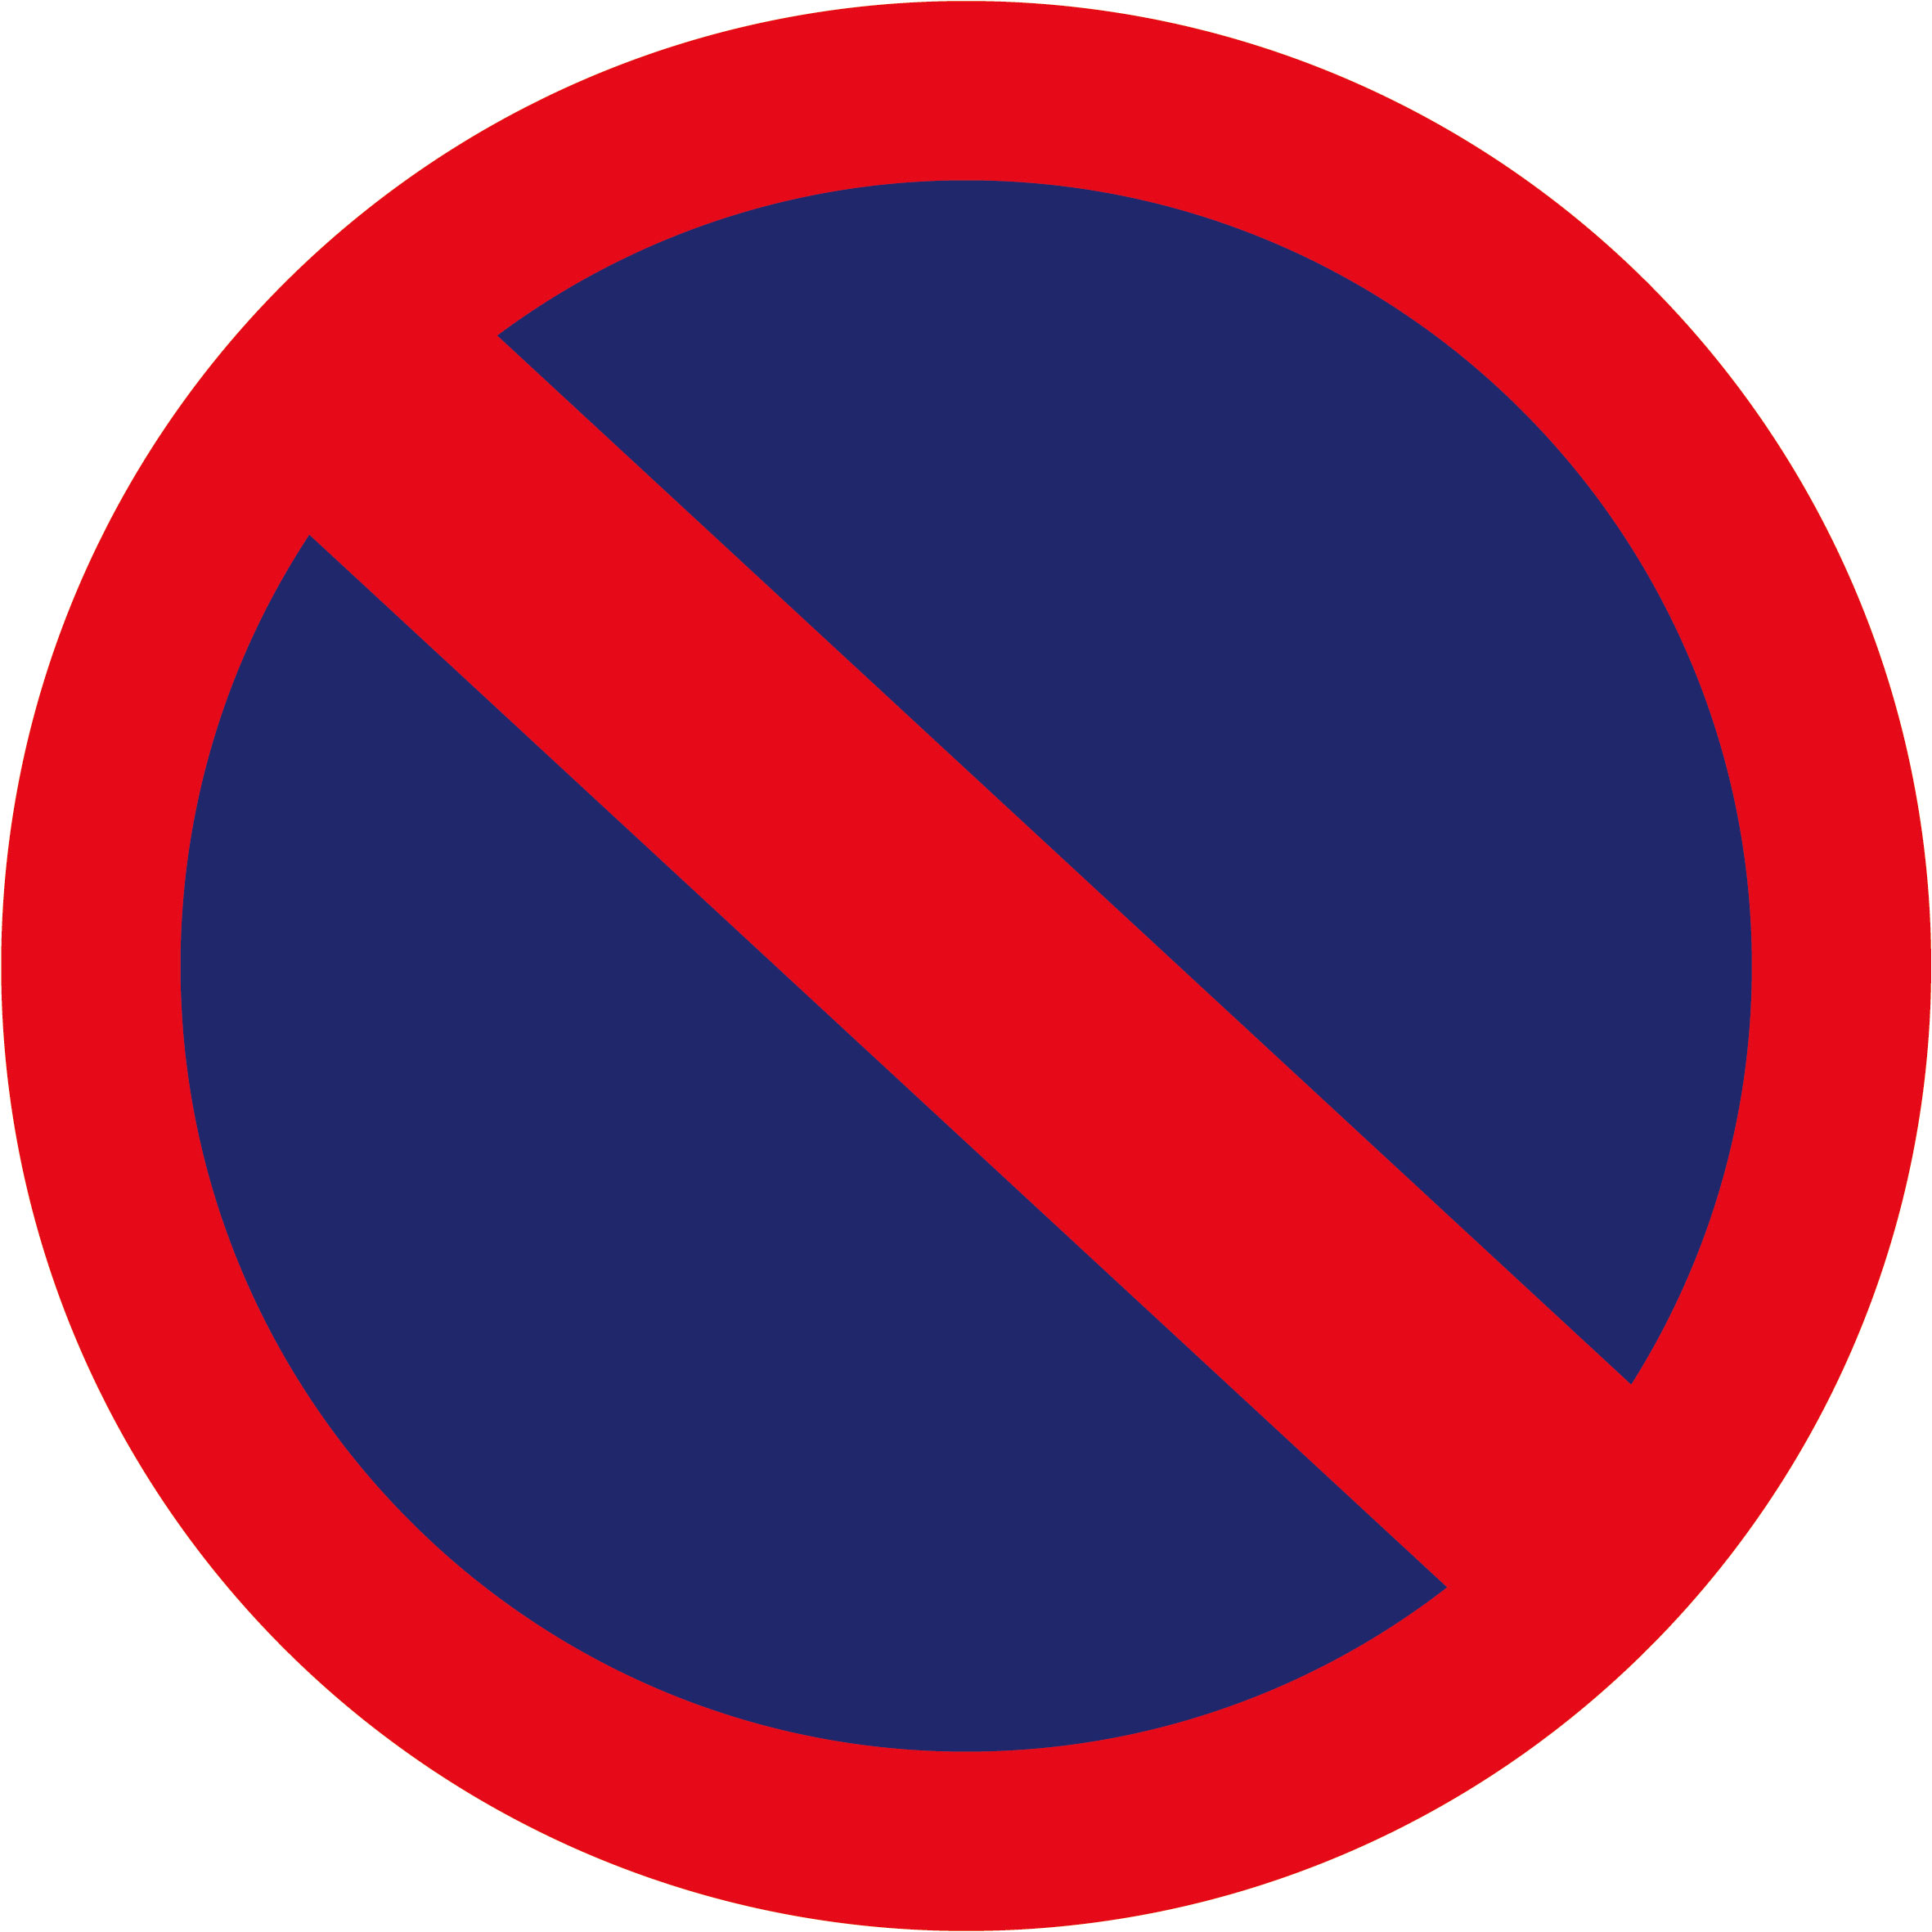 Road Traffic Signs and Symbols